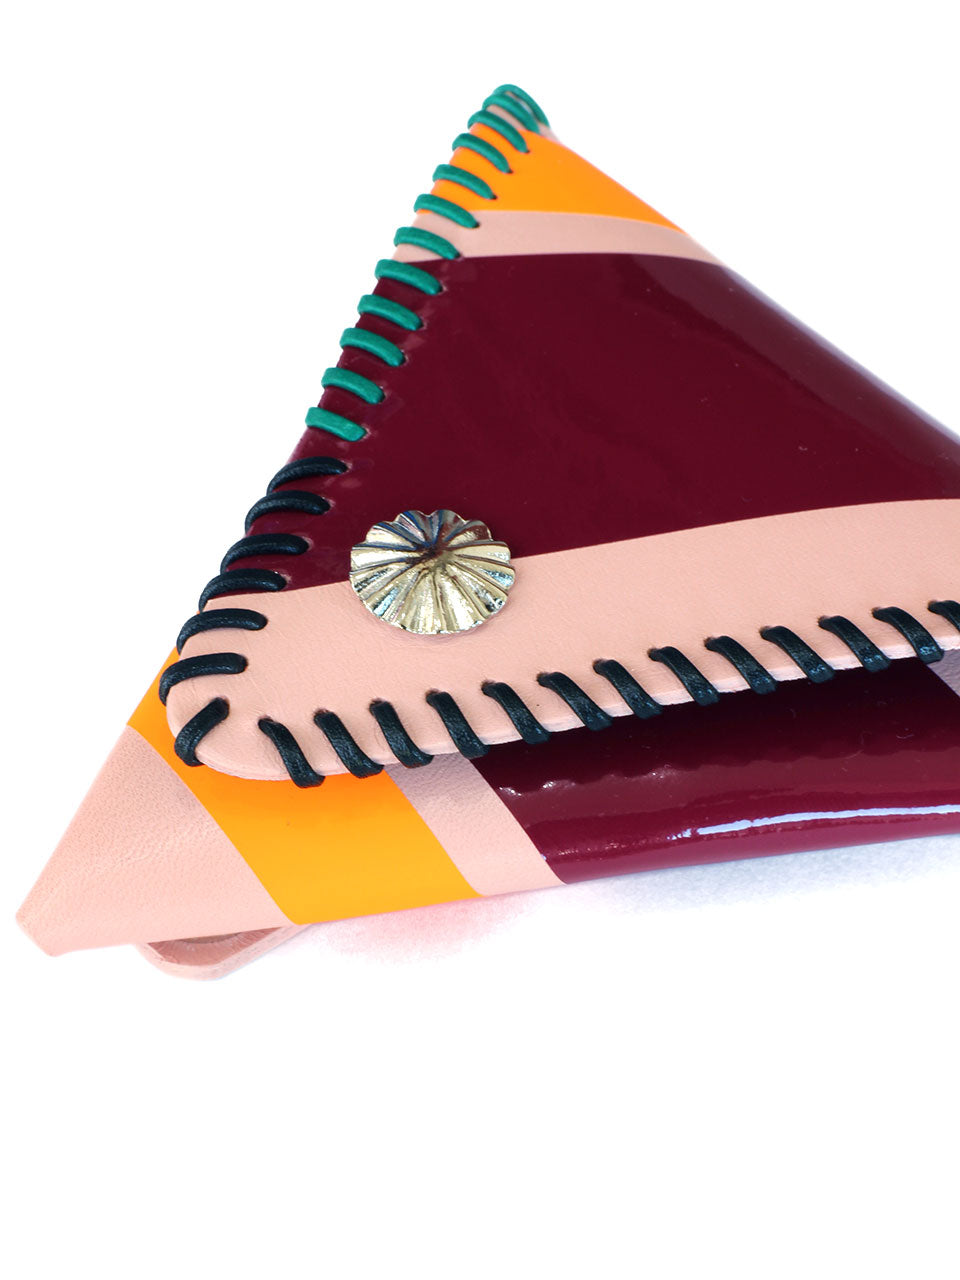 Metal Leather Wallet 4 (light pink)